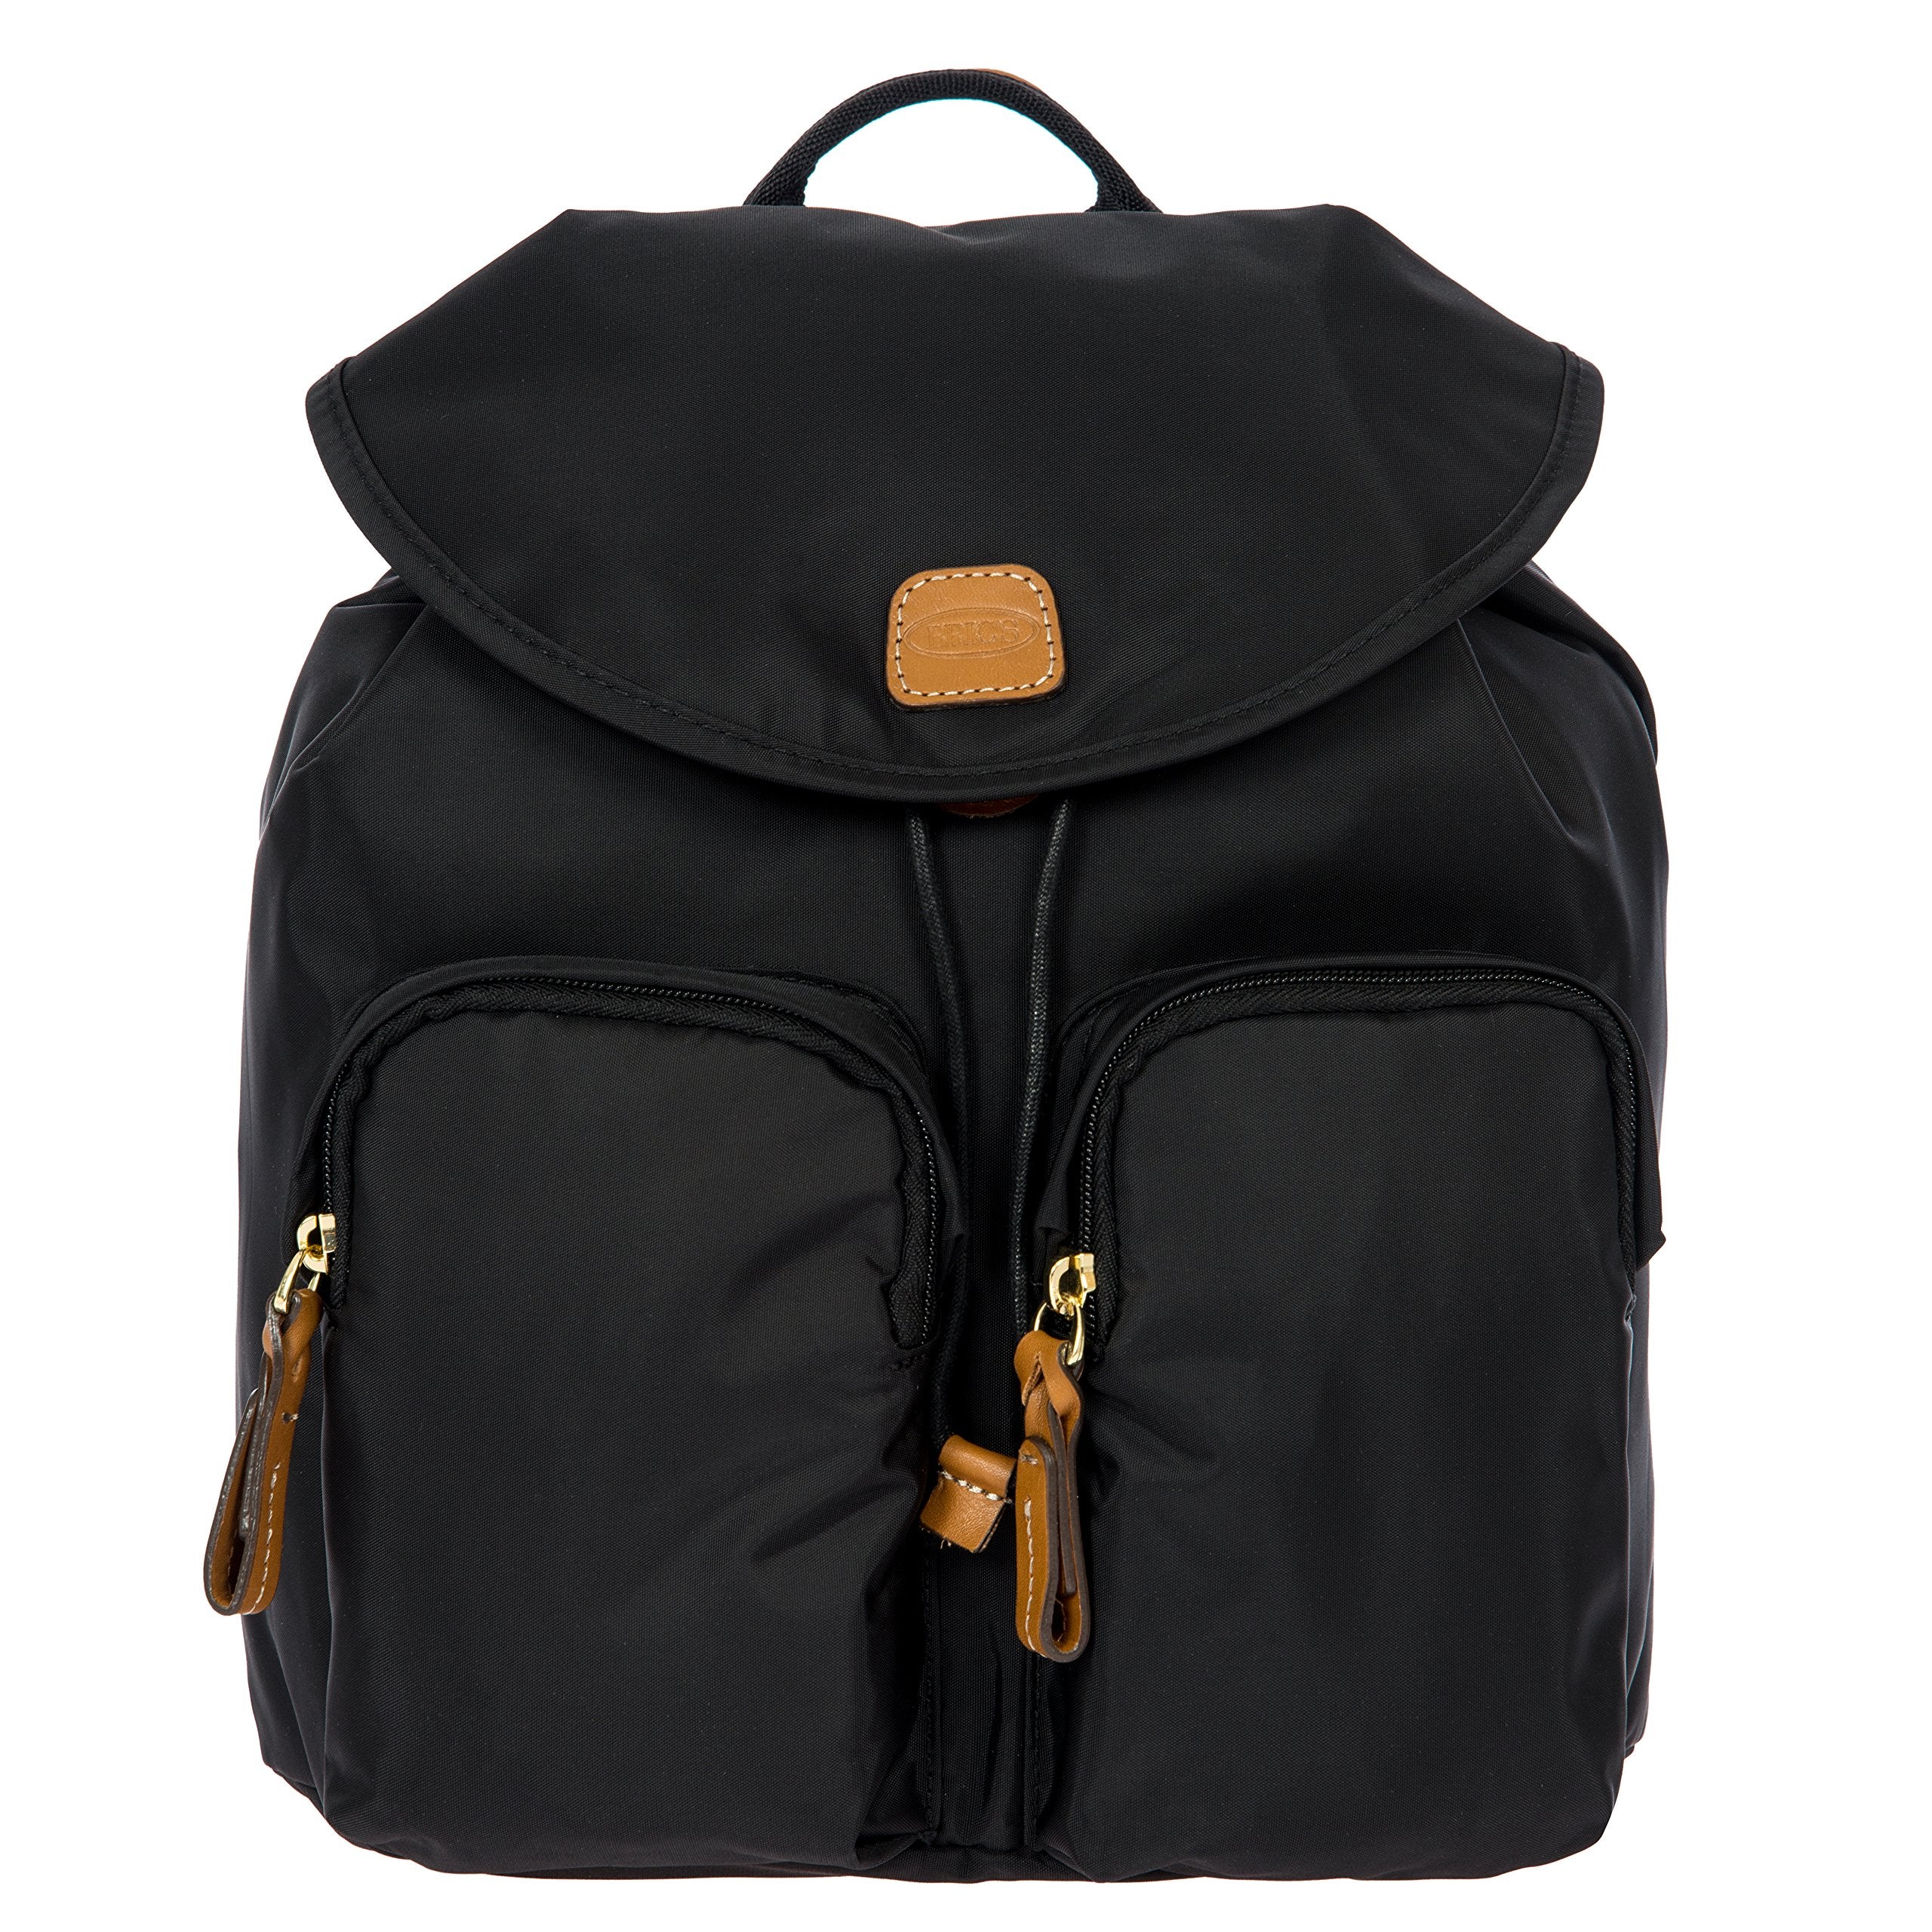 X-Bag Large Sportina Shopper, Travel Bags